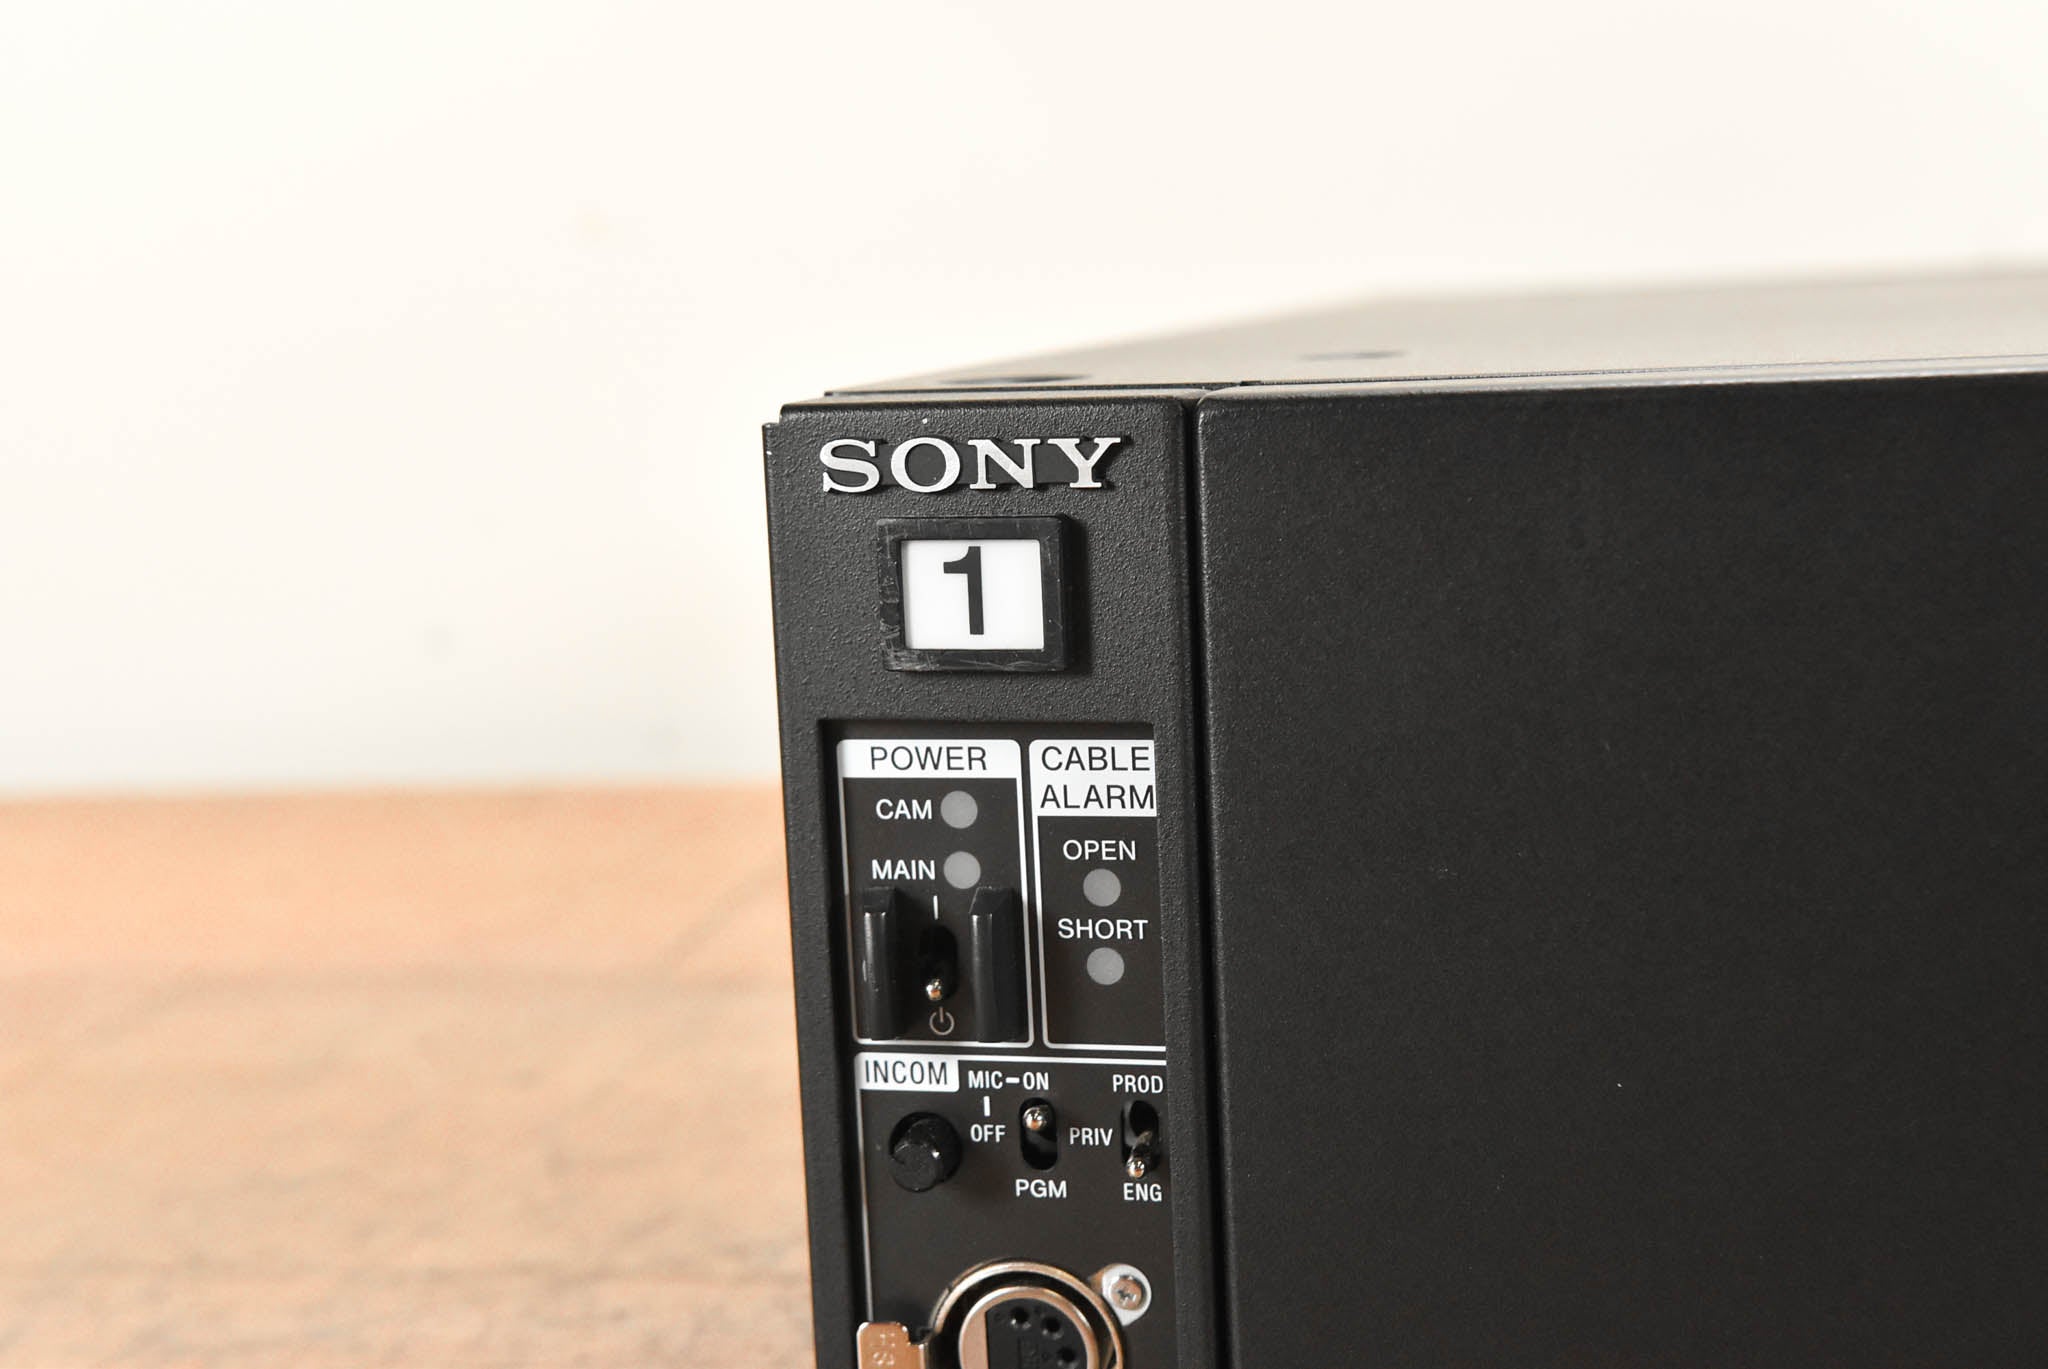 Sony HDCU-1500 HD Camera Control Unit for HDC-1500 Series
Cameras